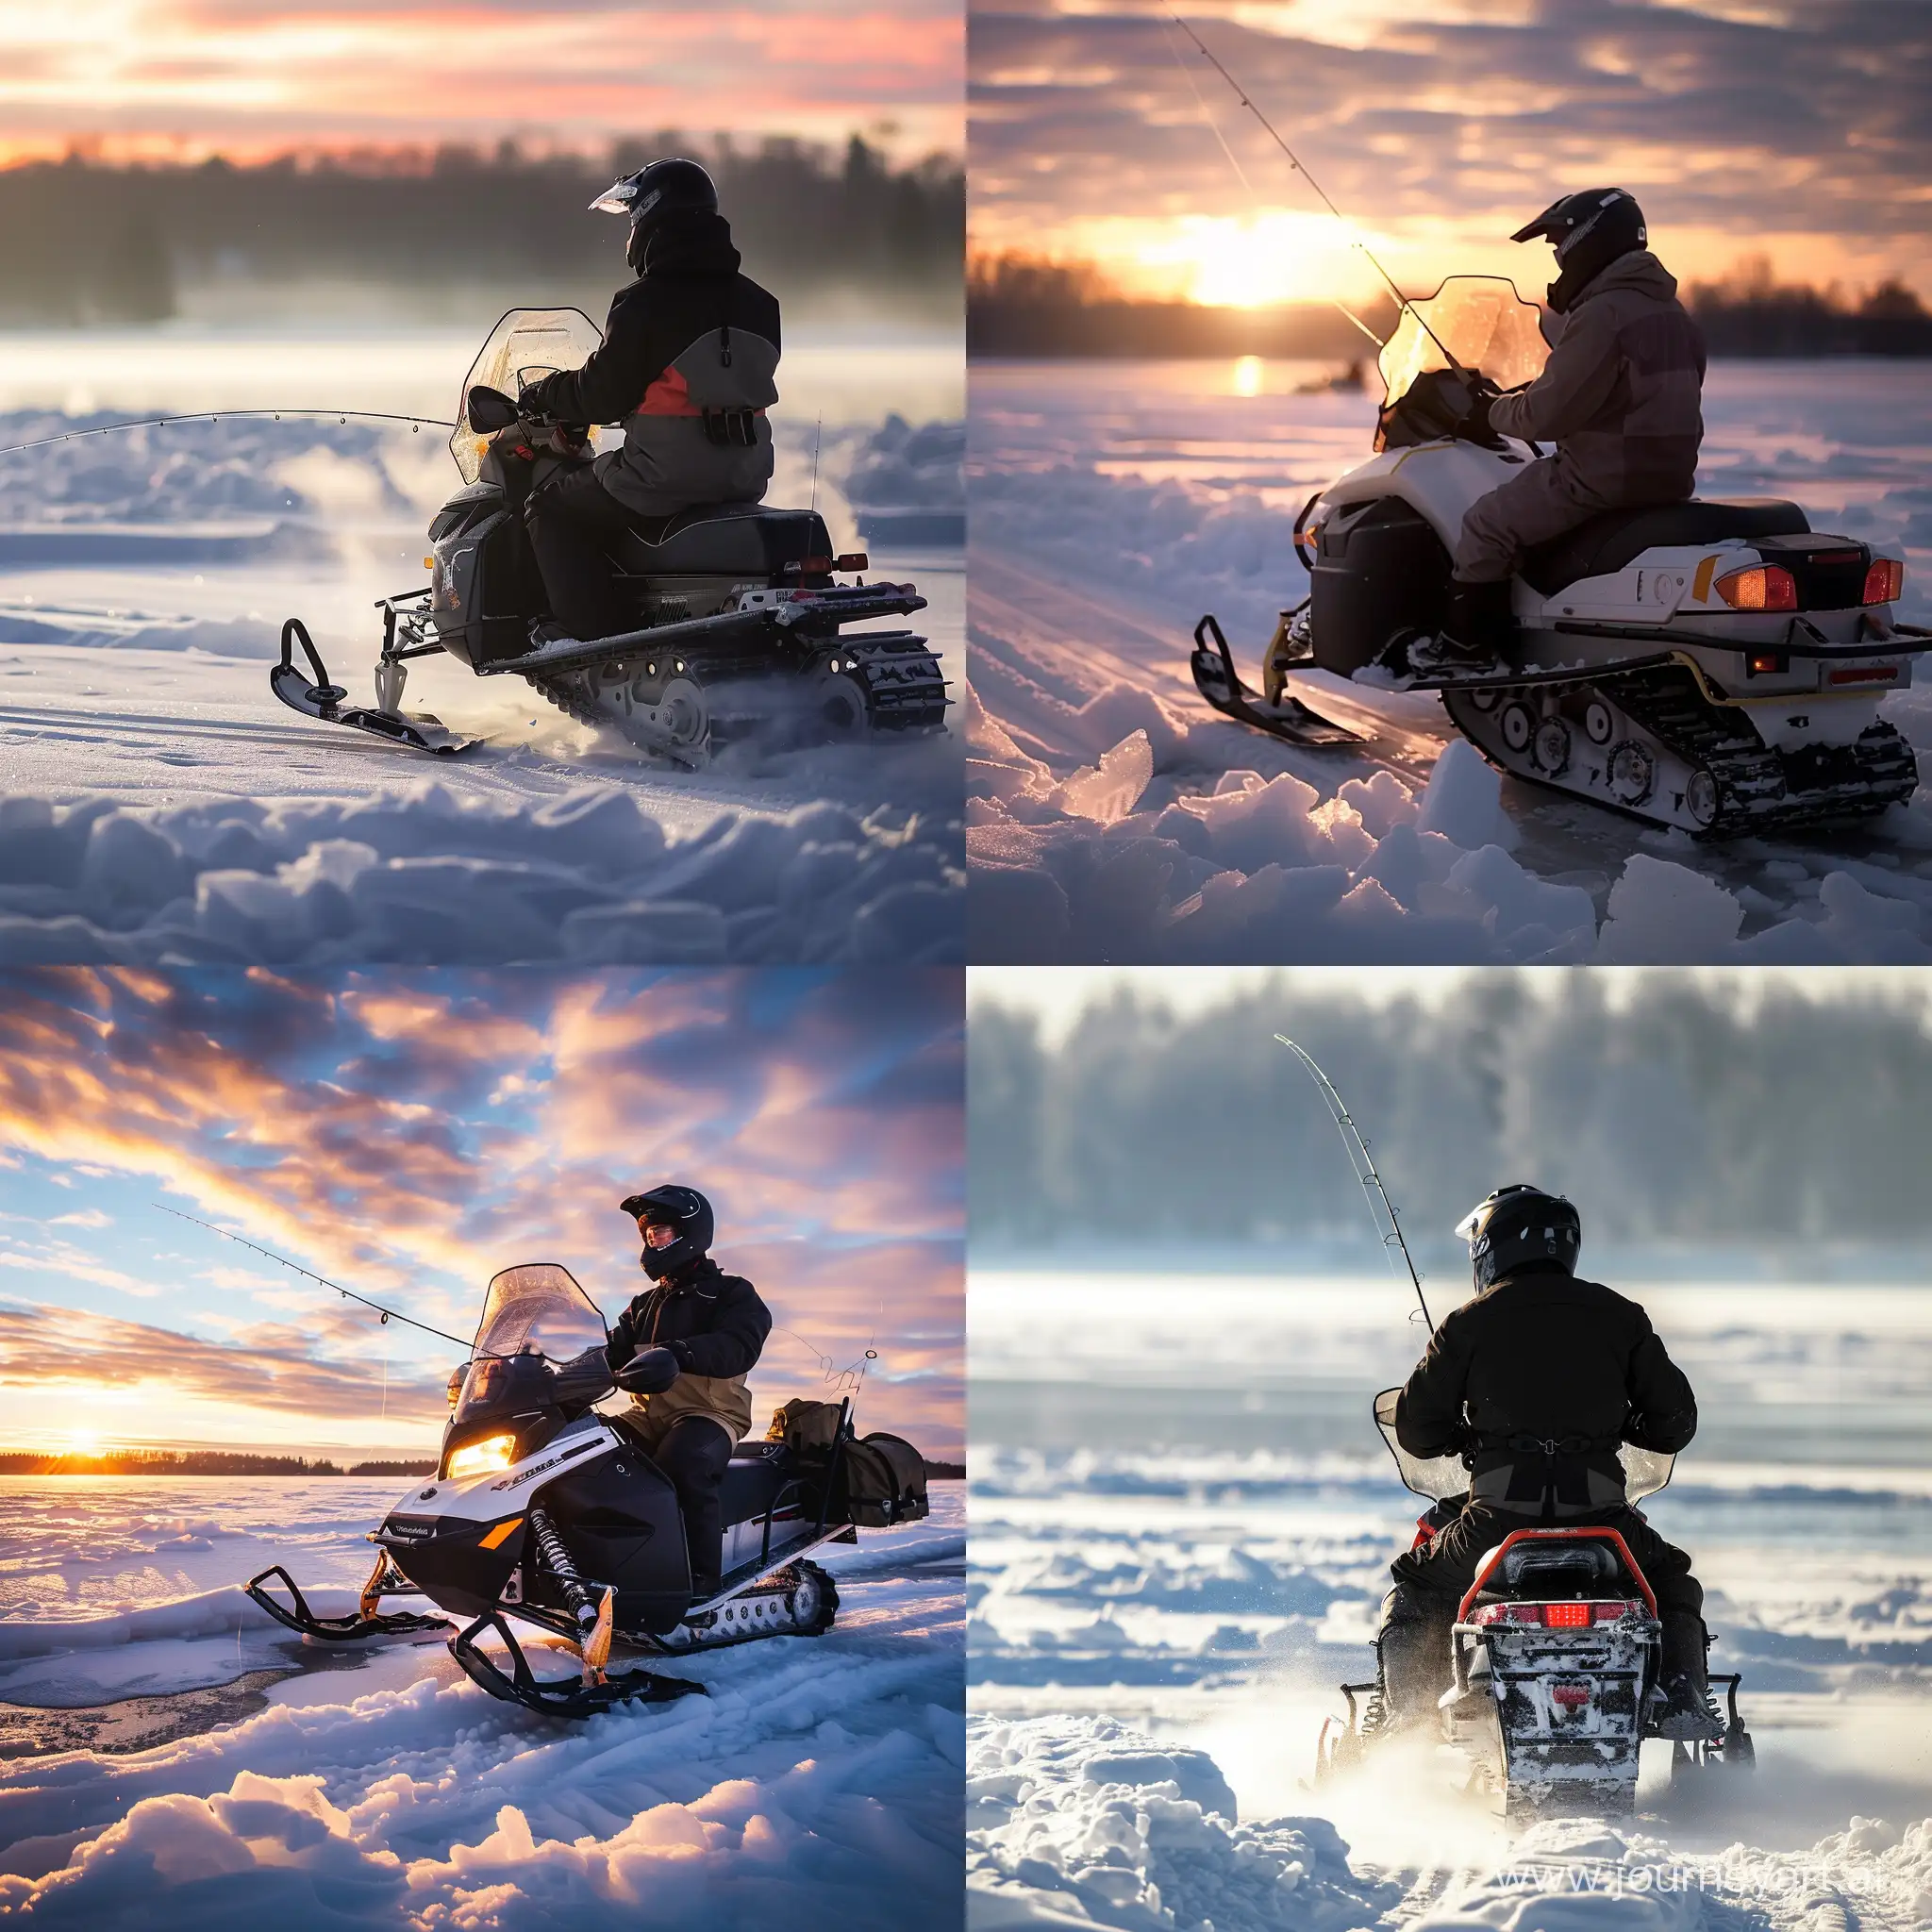 Winter-Ice-Fishing-Adventure-on-Snowmobile